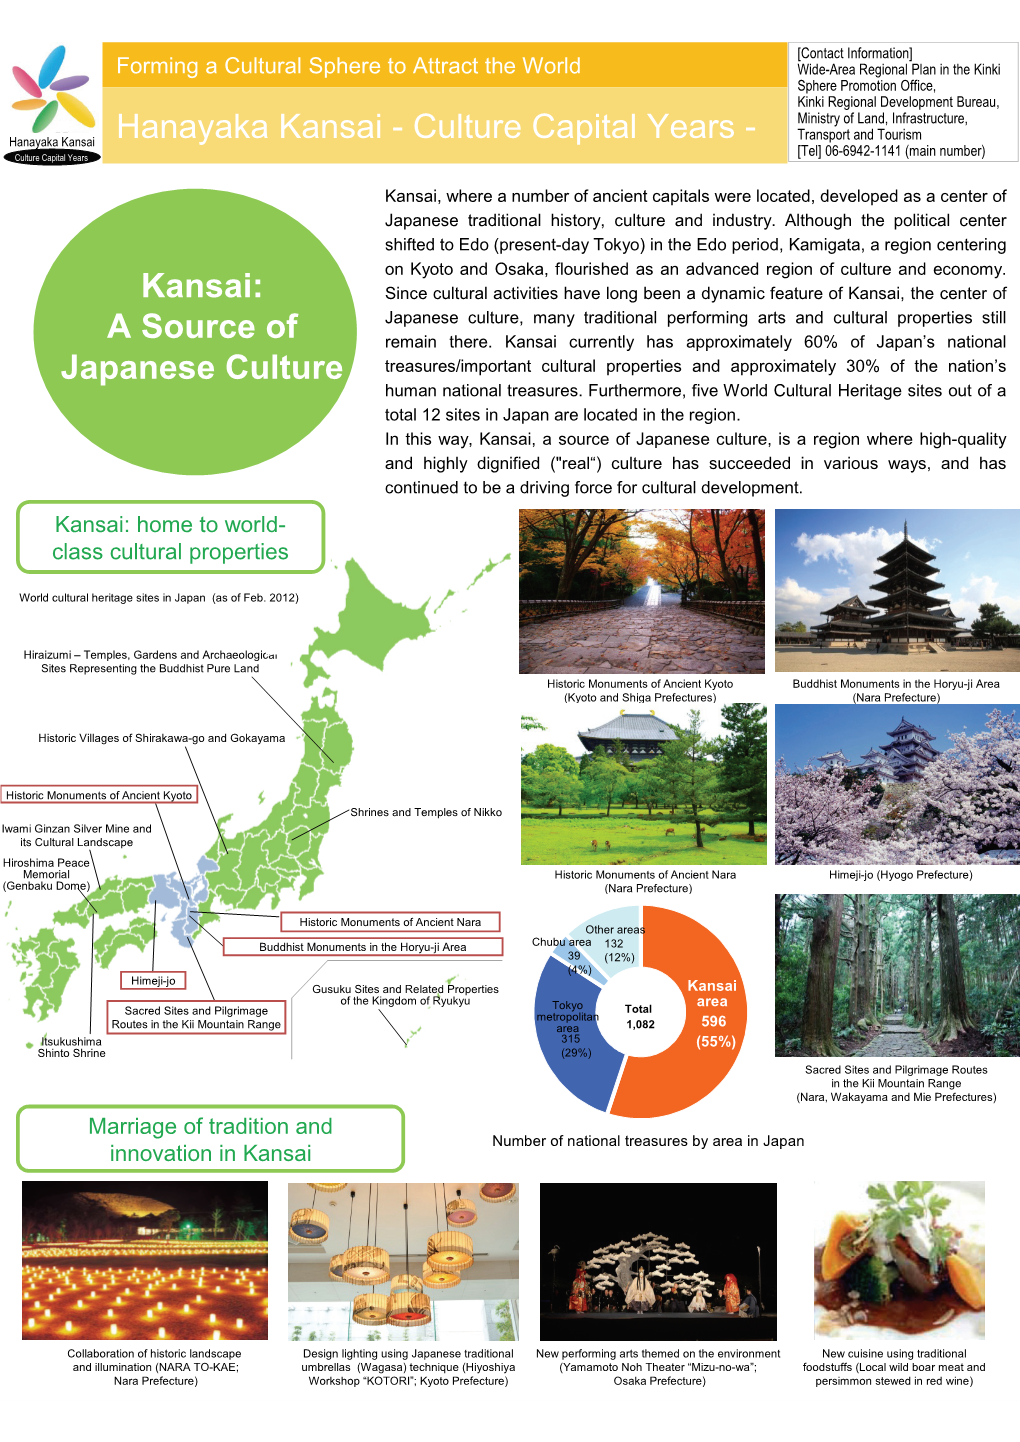 Hanayaka Kansai Hanayaka Kansai - Culture Capital Years - Transport and Tourism Culture Capital Years [Tel] 06-6942-1141 (Main Number)